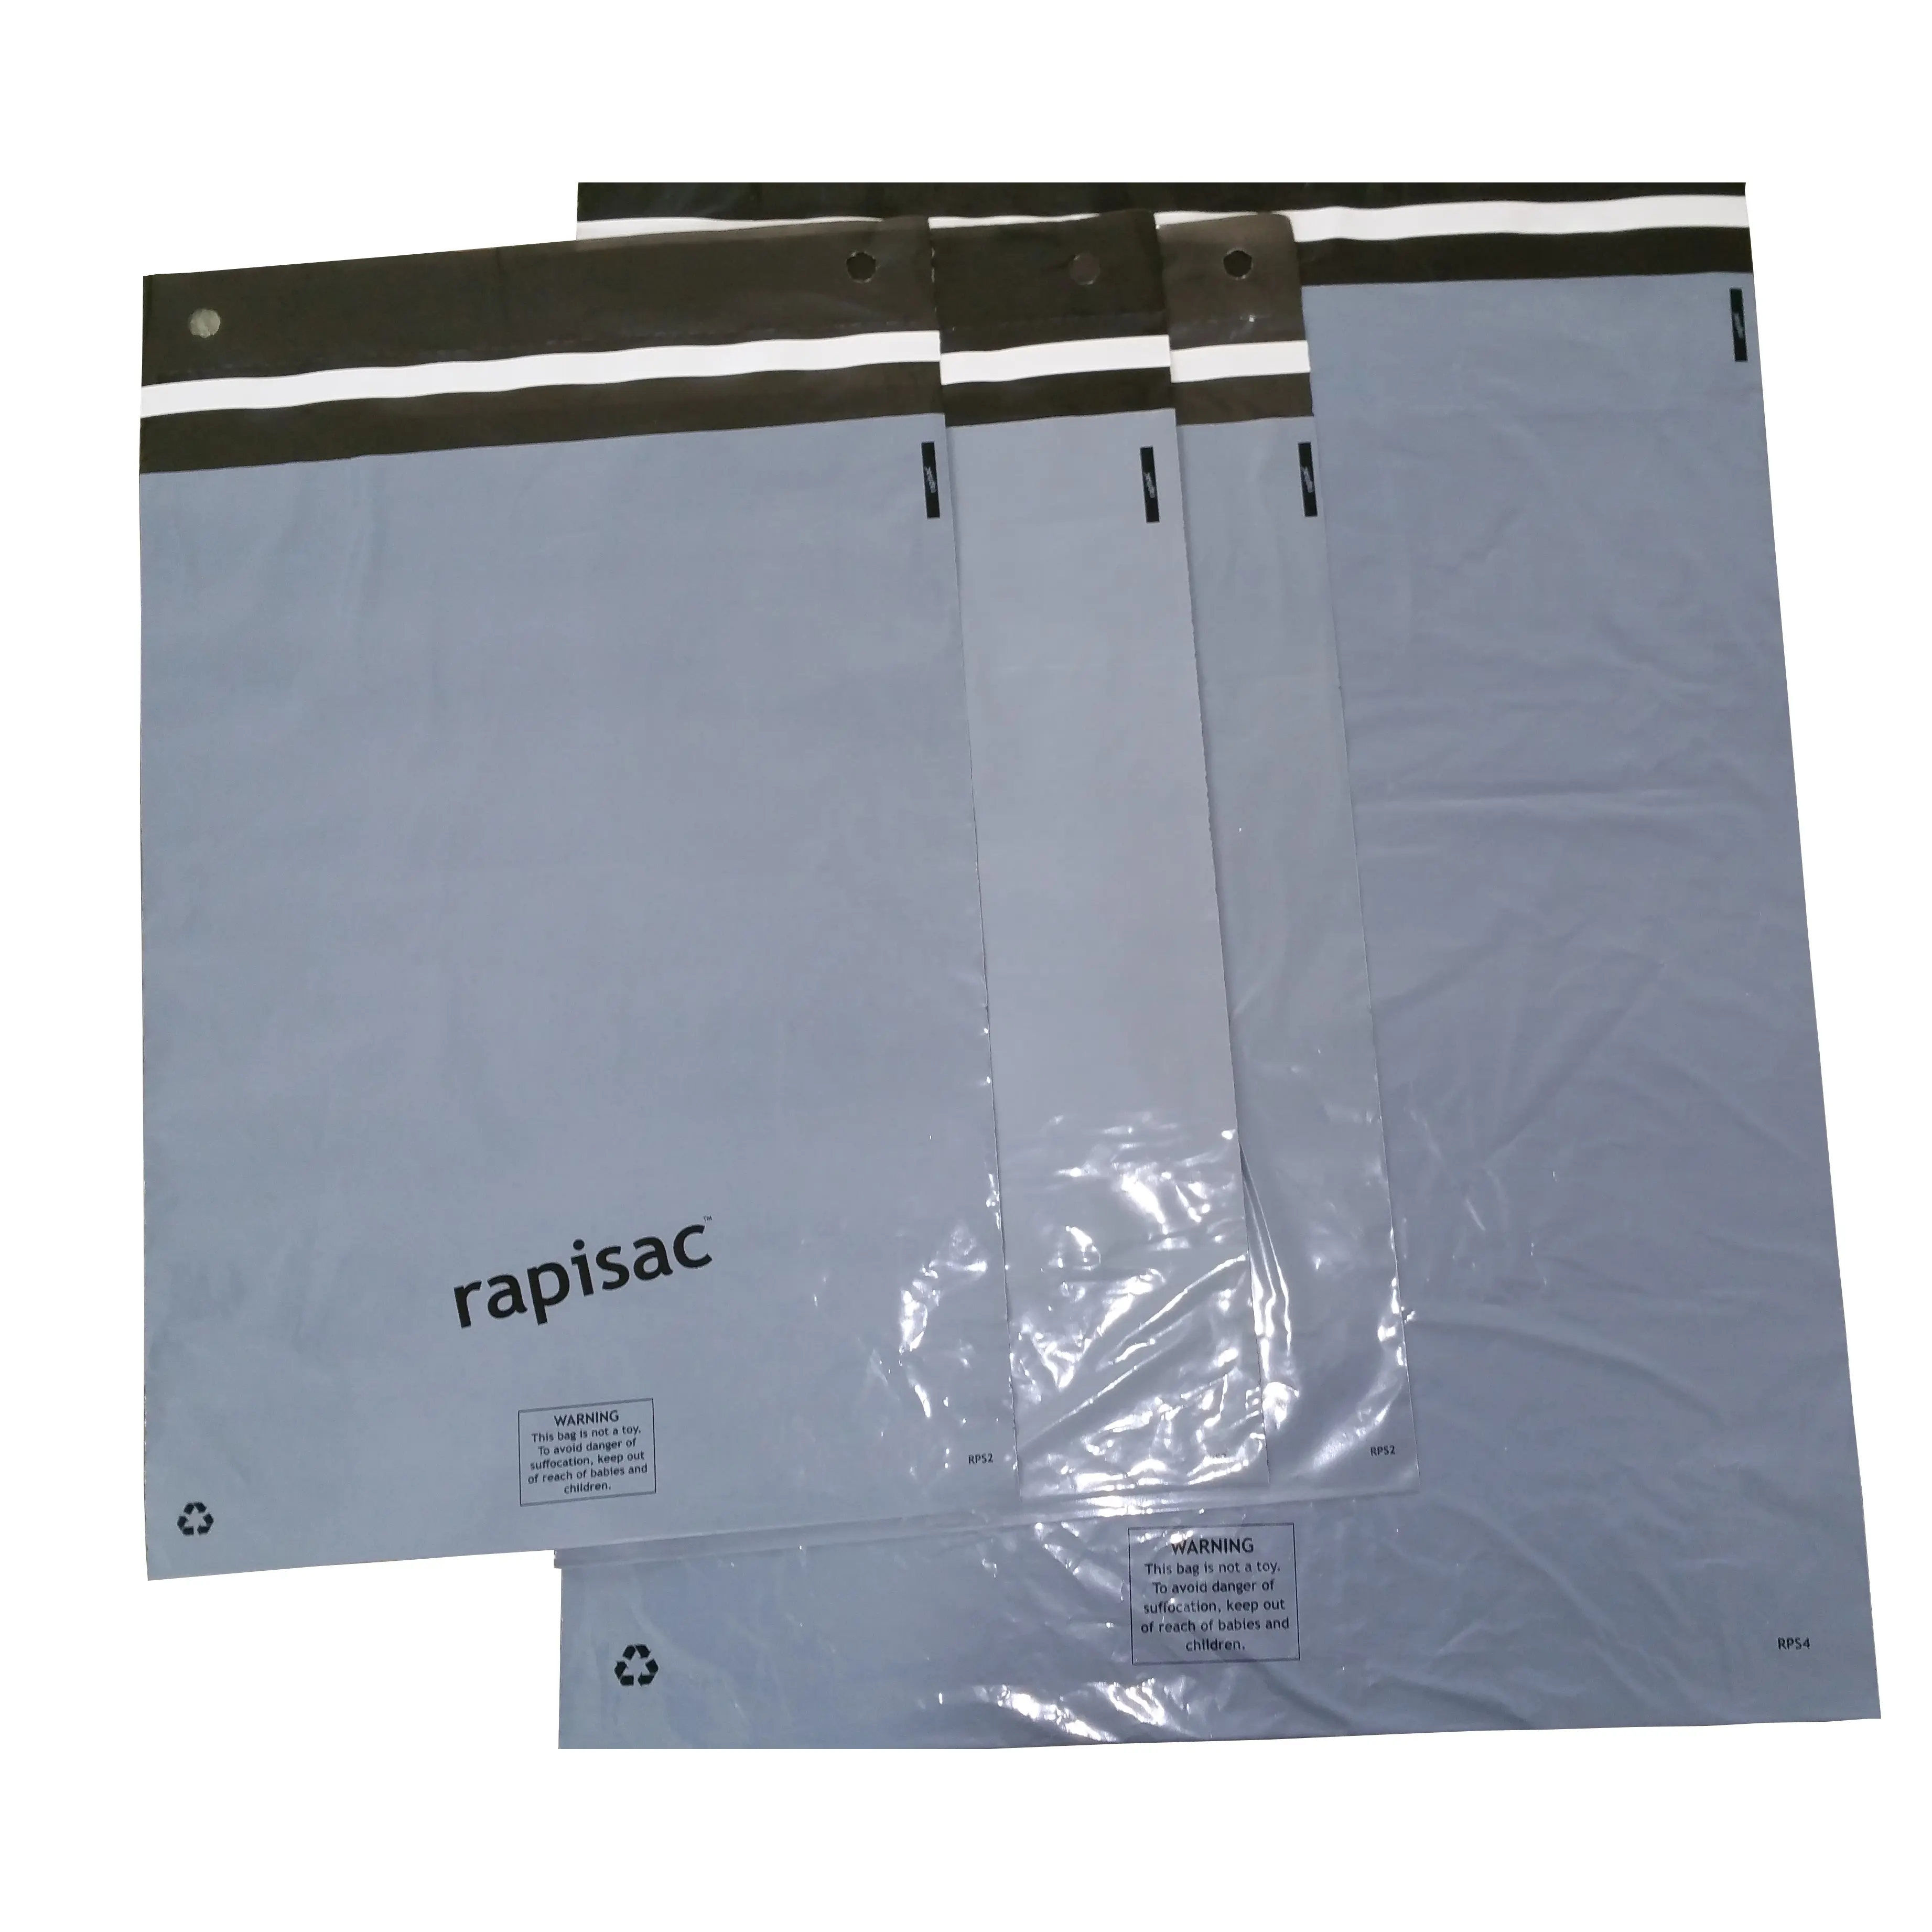 कस्टम लोगो प्लास्टिक मेलिंग शिपिंग लिफाफे बैग polymailer डाक satchels कूरियर पश्चिमी पाली मेलर बैग